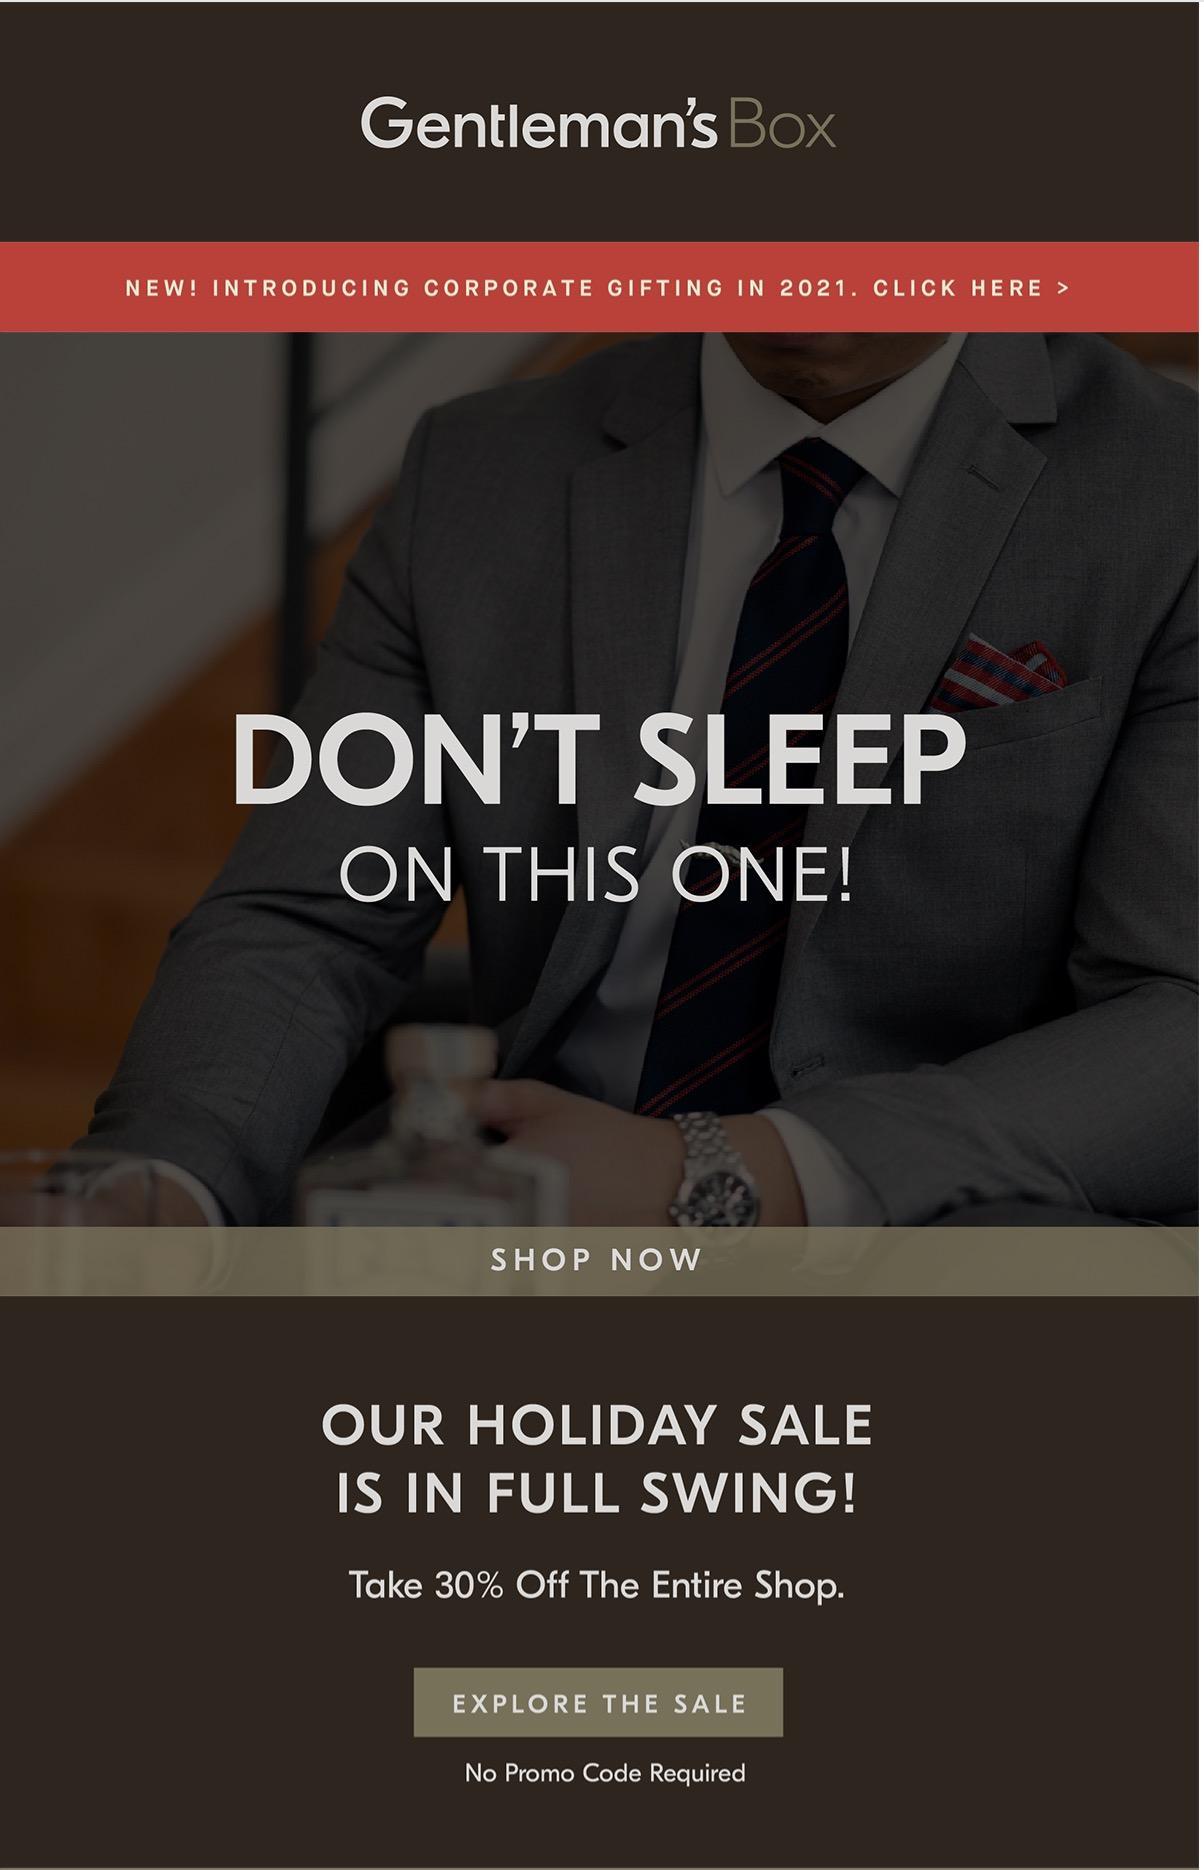 Gentleman’s Box Holiday Sale – Save 30%!